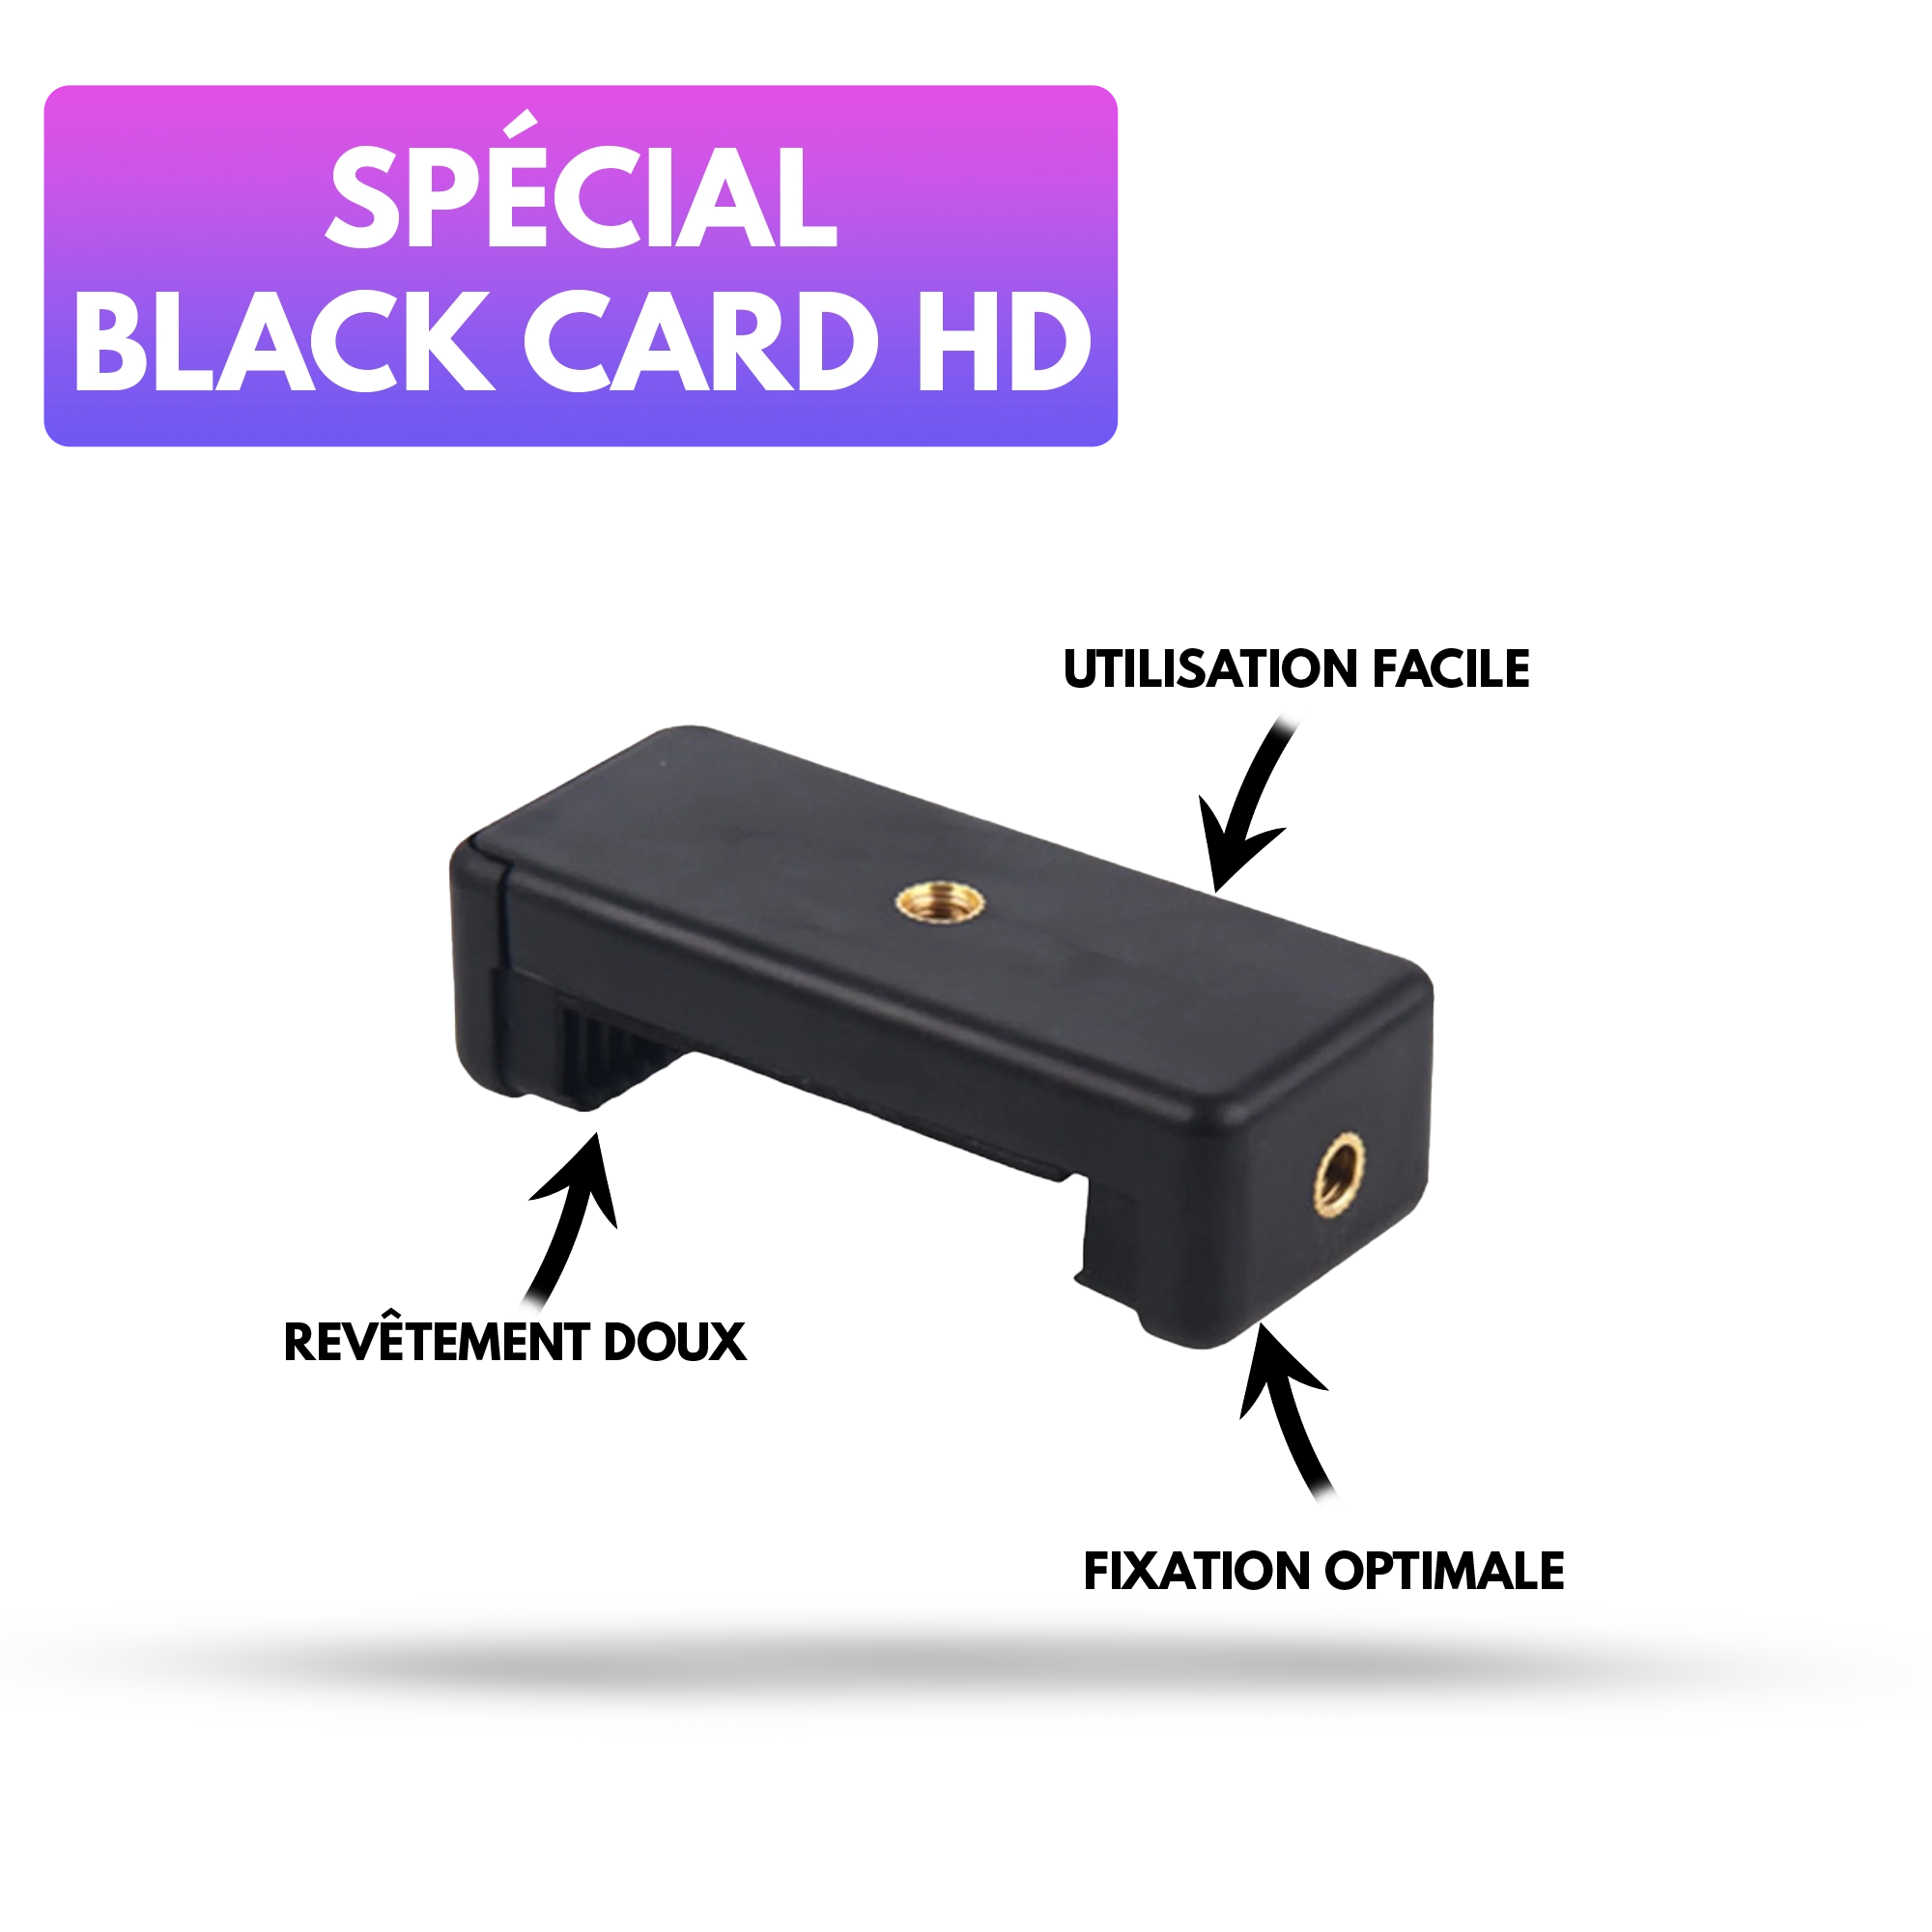 Tripod Support for Black Card HD Mini Projector